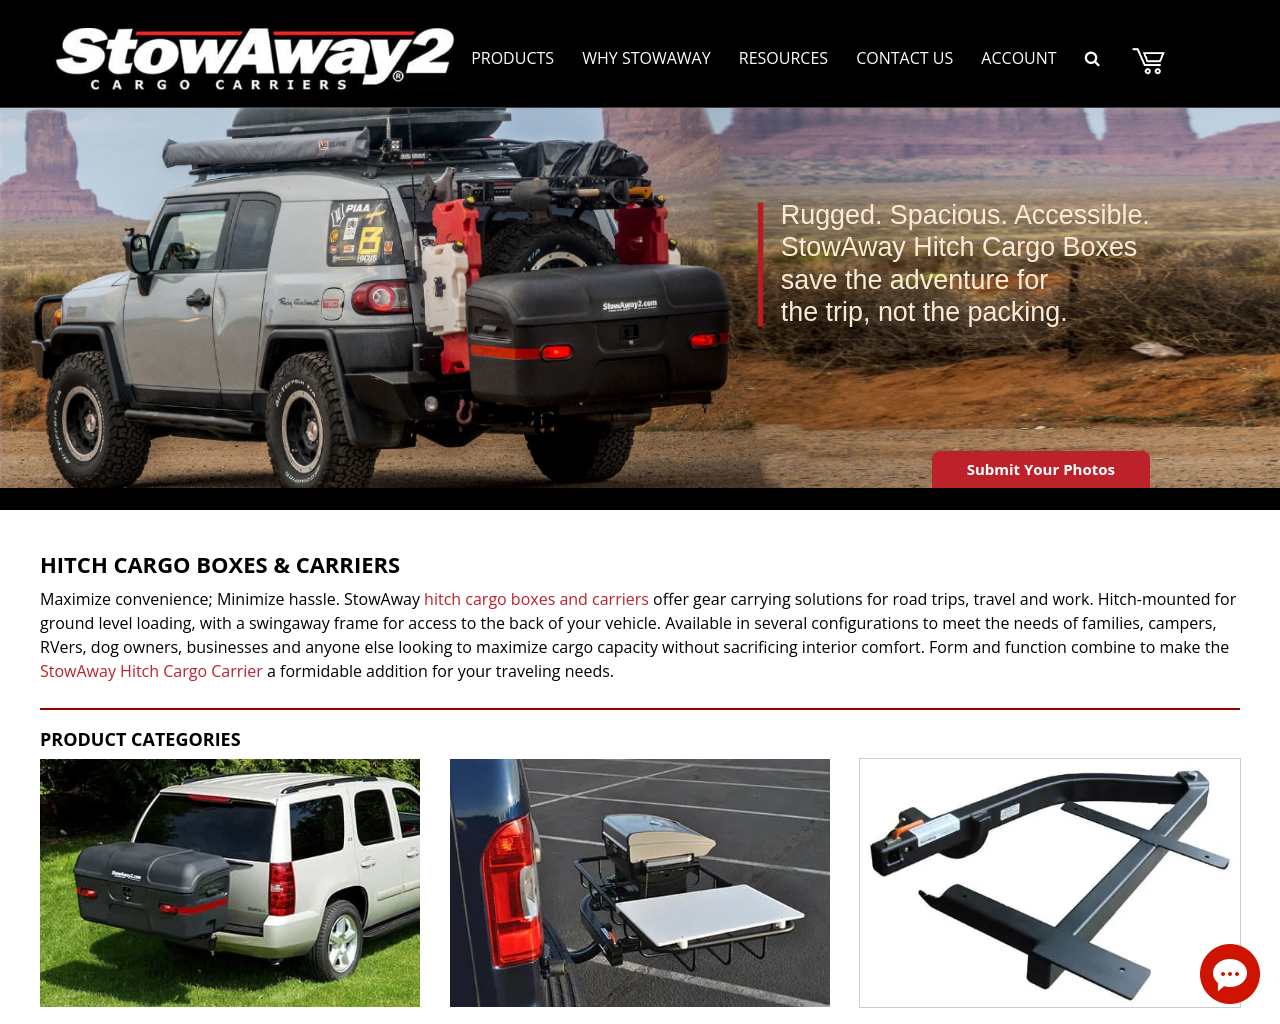 stowaway2.com